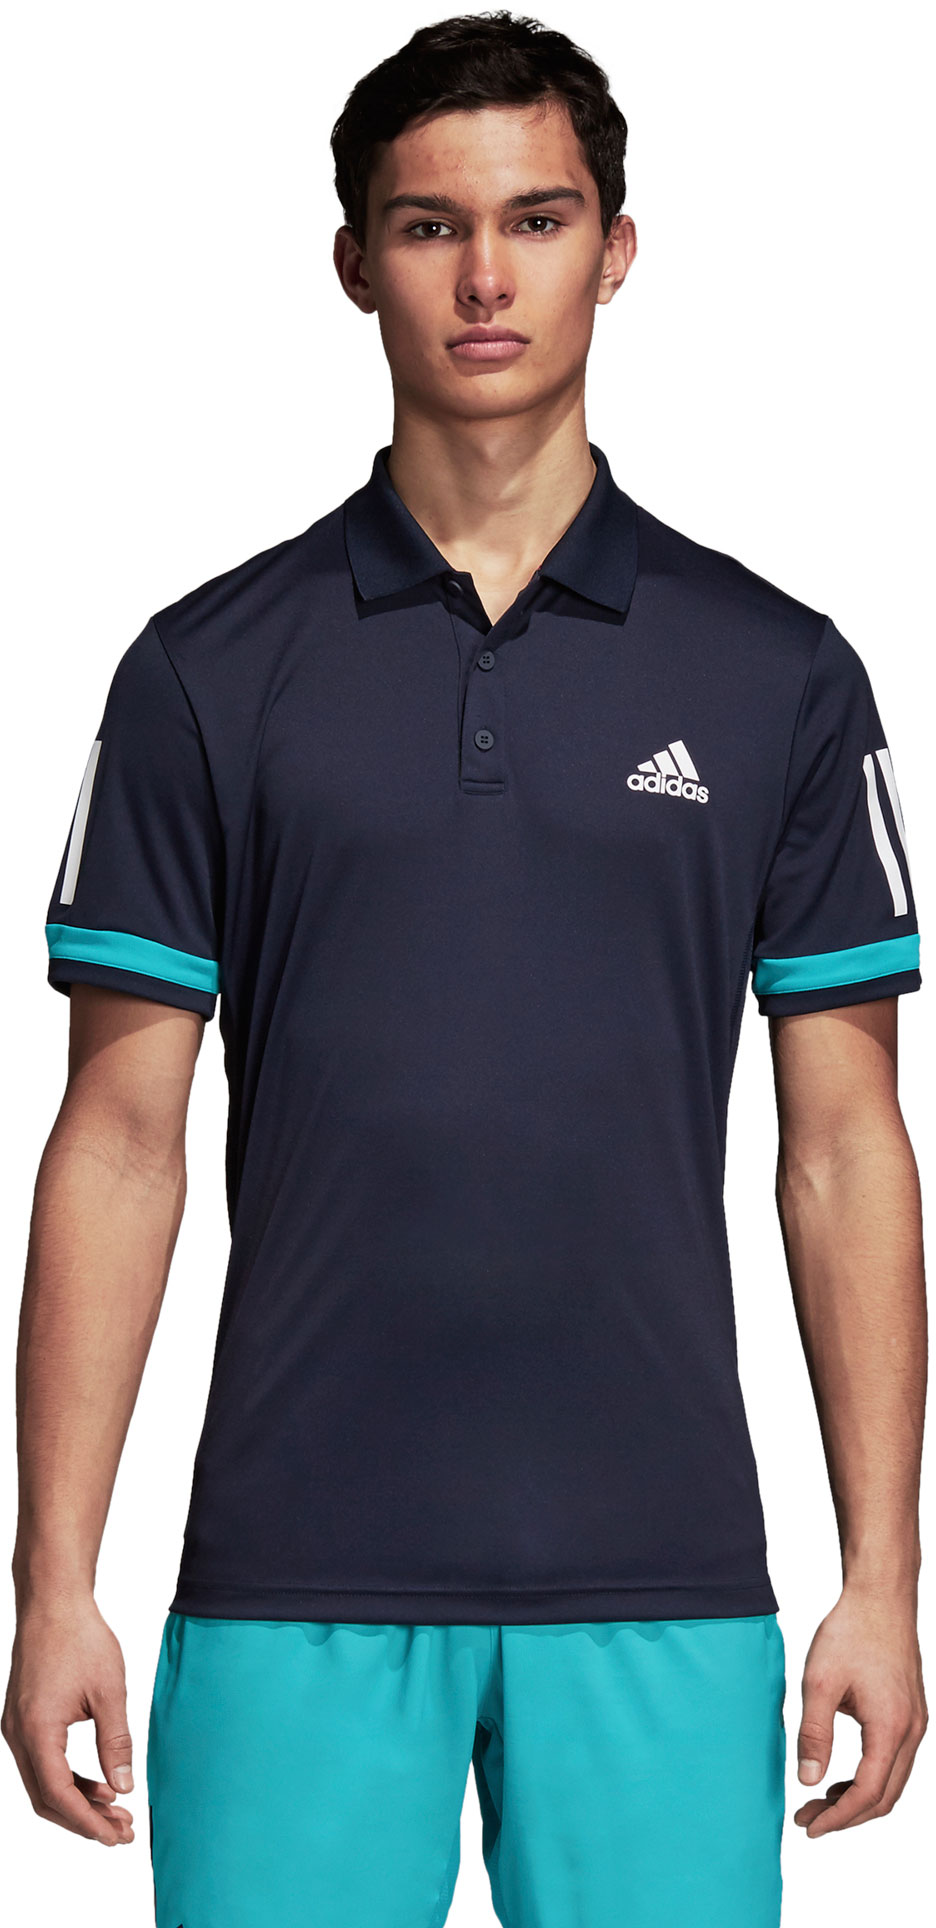 Tennis polo shirt